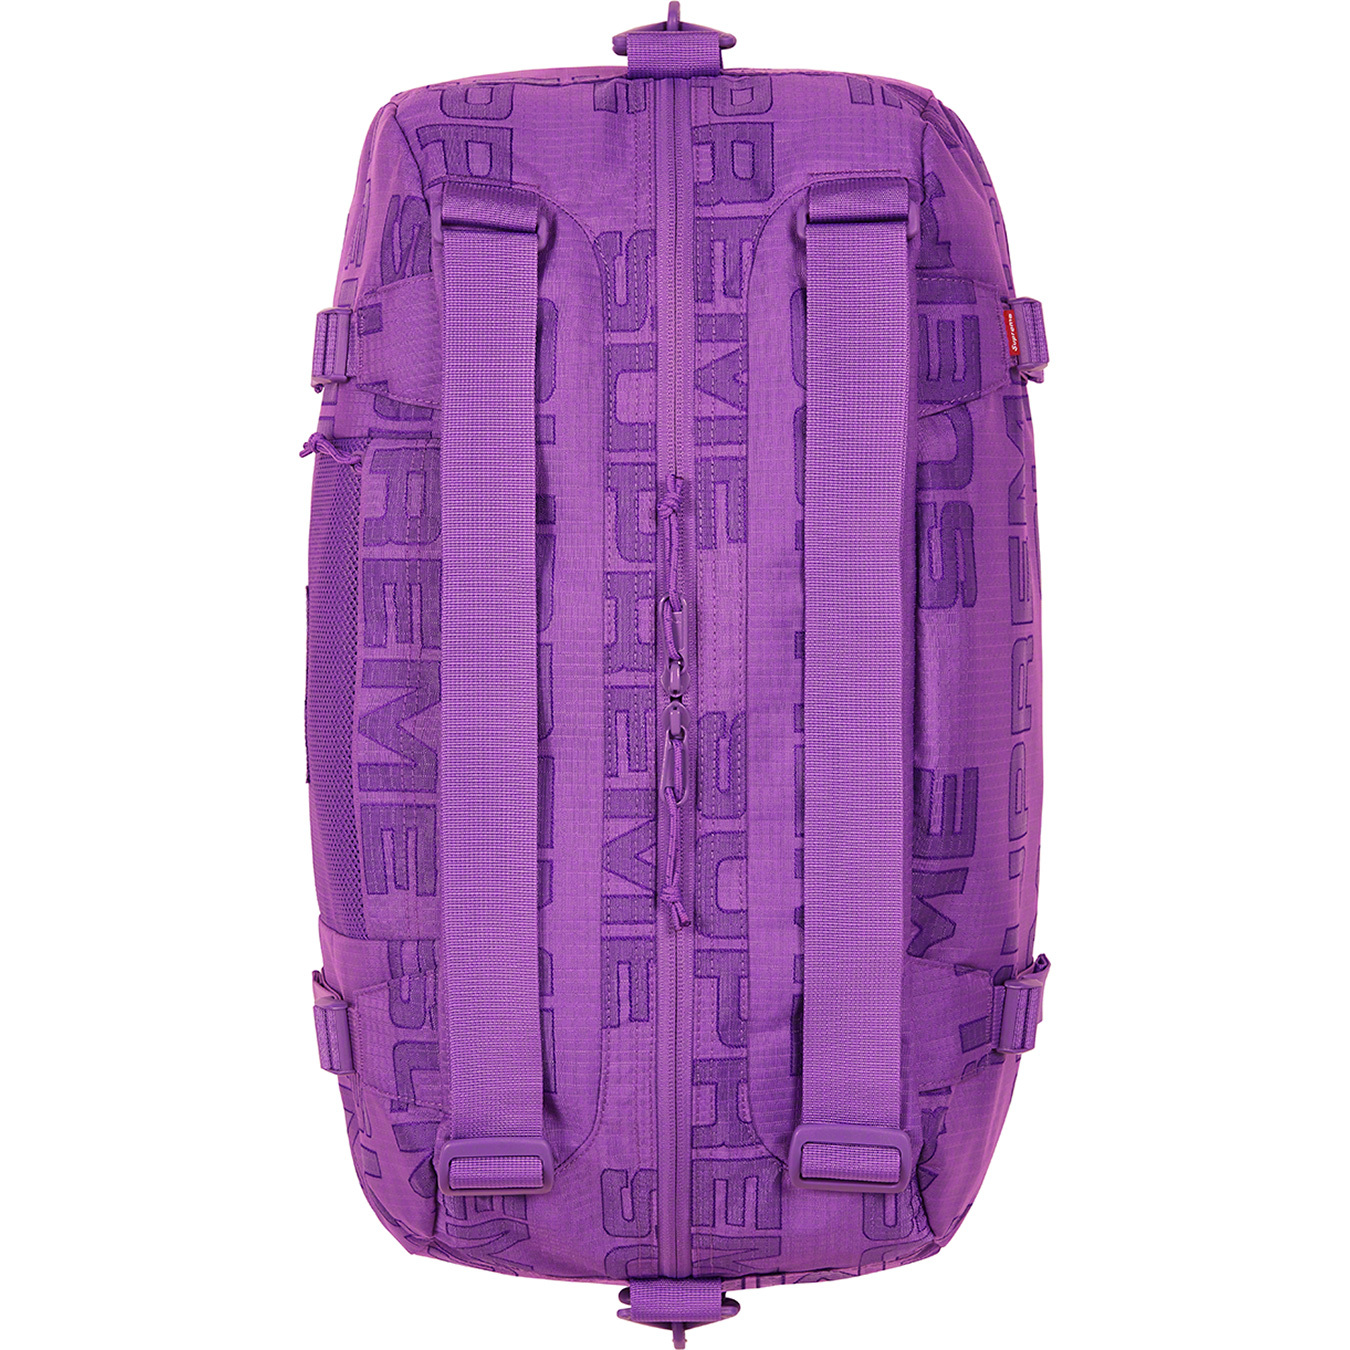 Supreme Duffle Bag FW 21 Purple - Stadium Goods